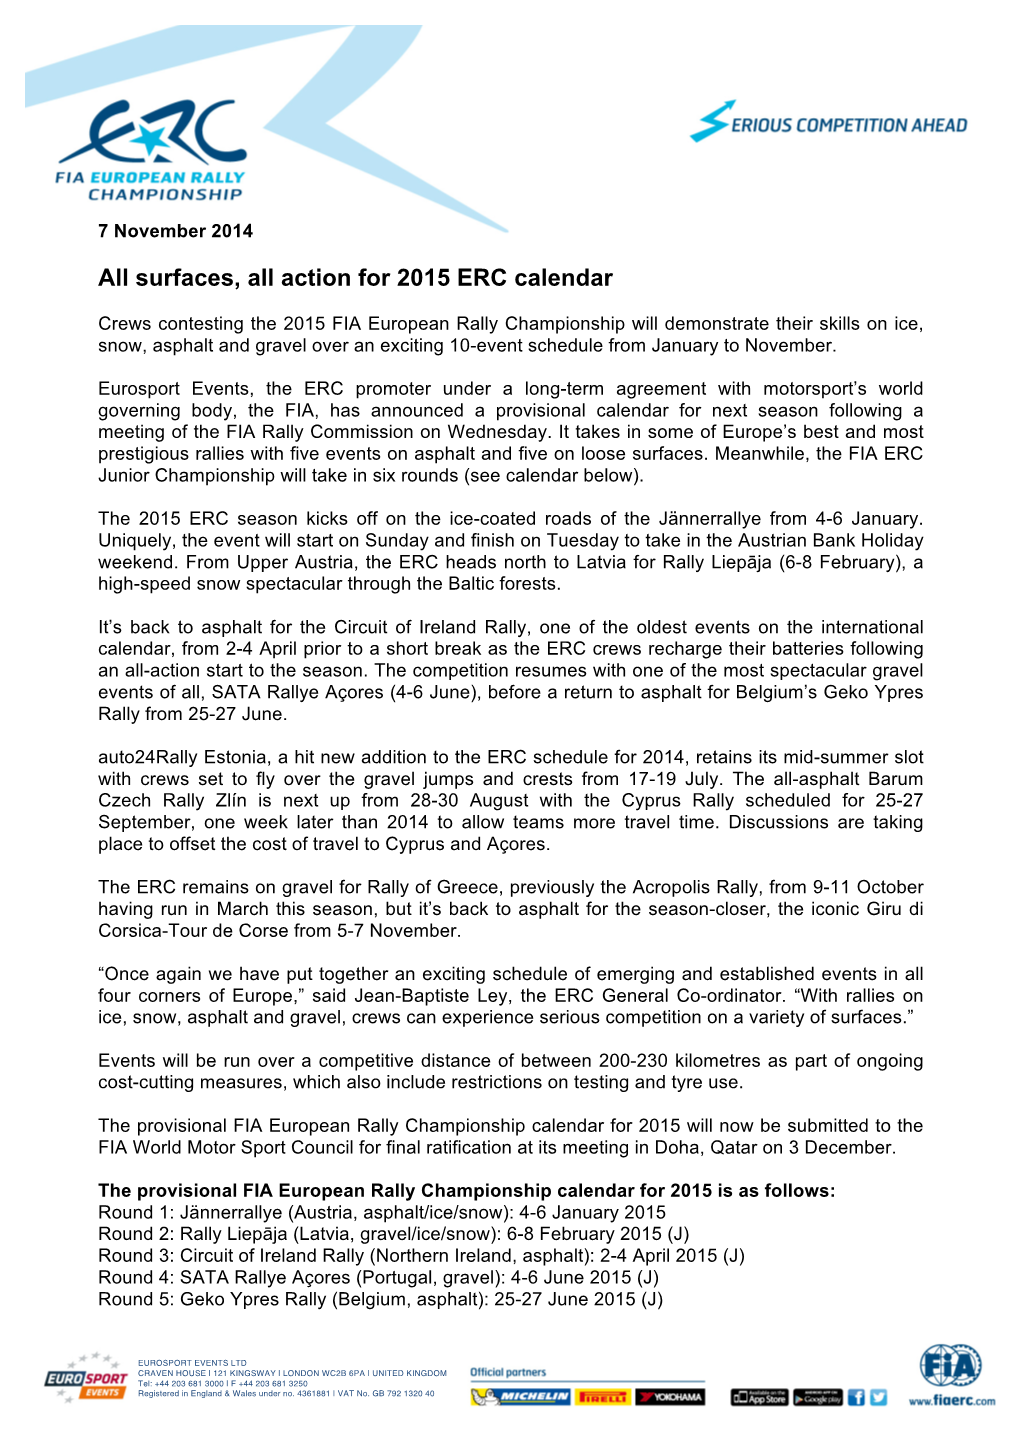 Surfaces, All Action for 2015 ERC Calendar